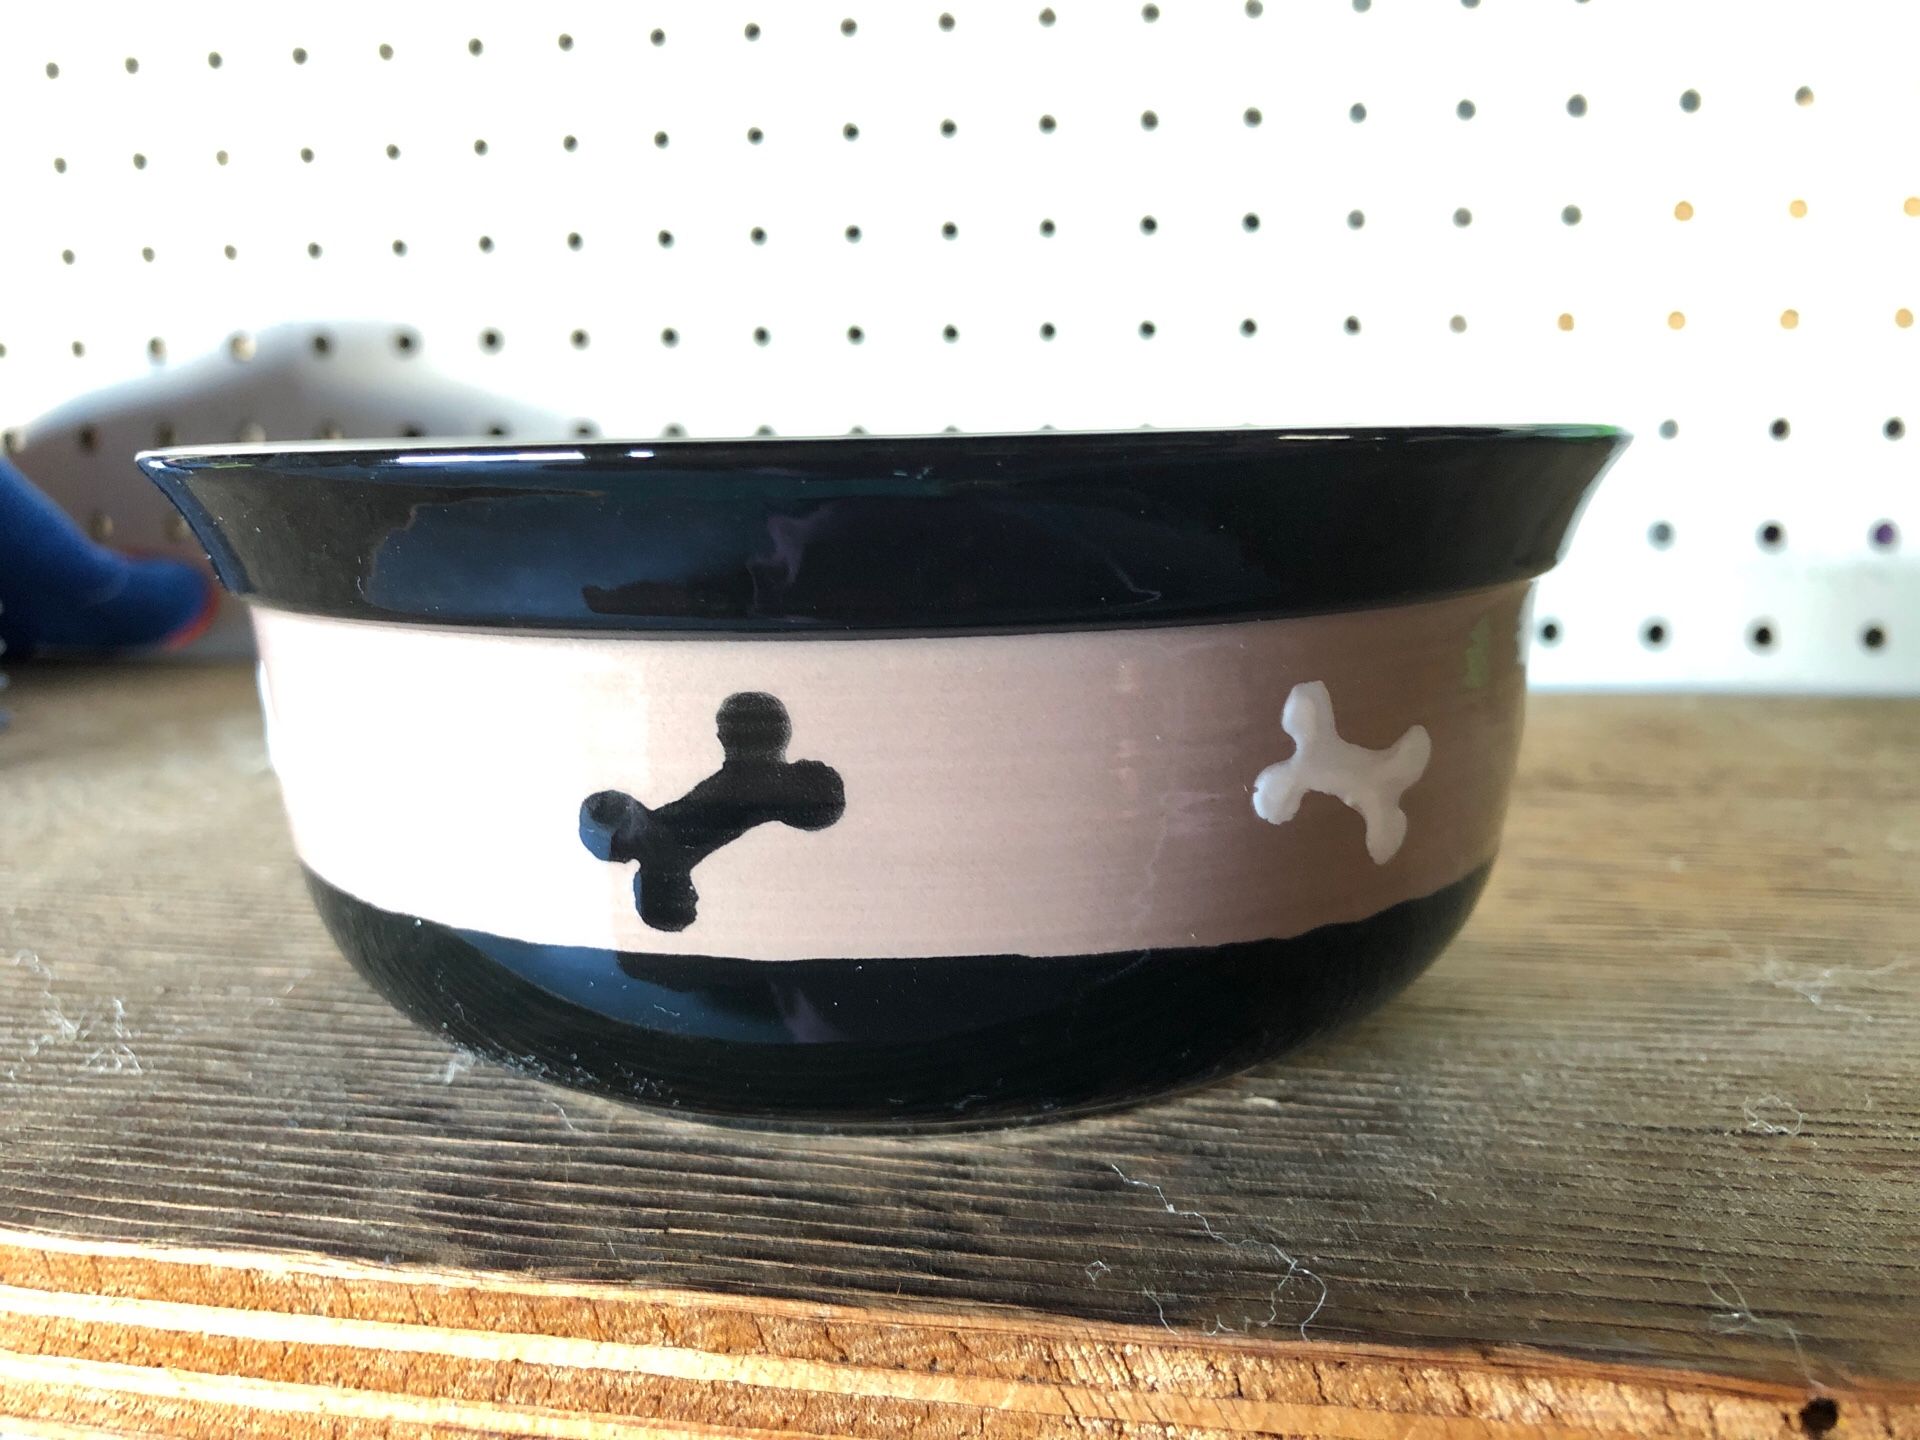 Brand new dog bowls